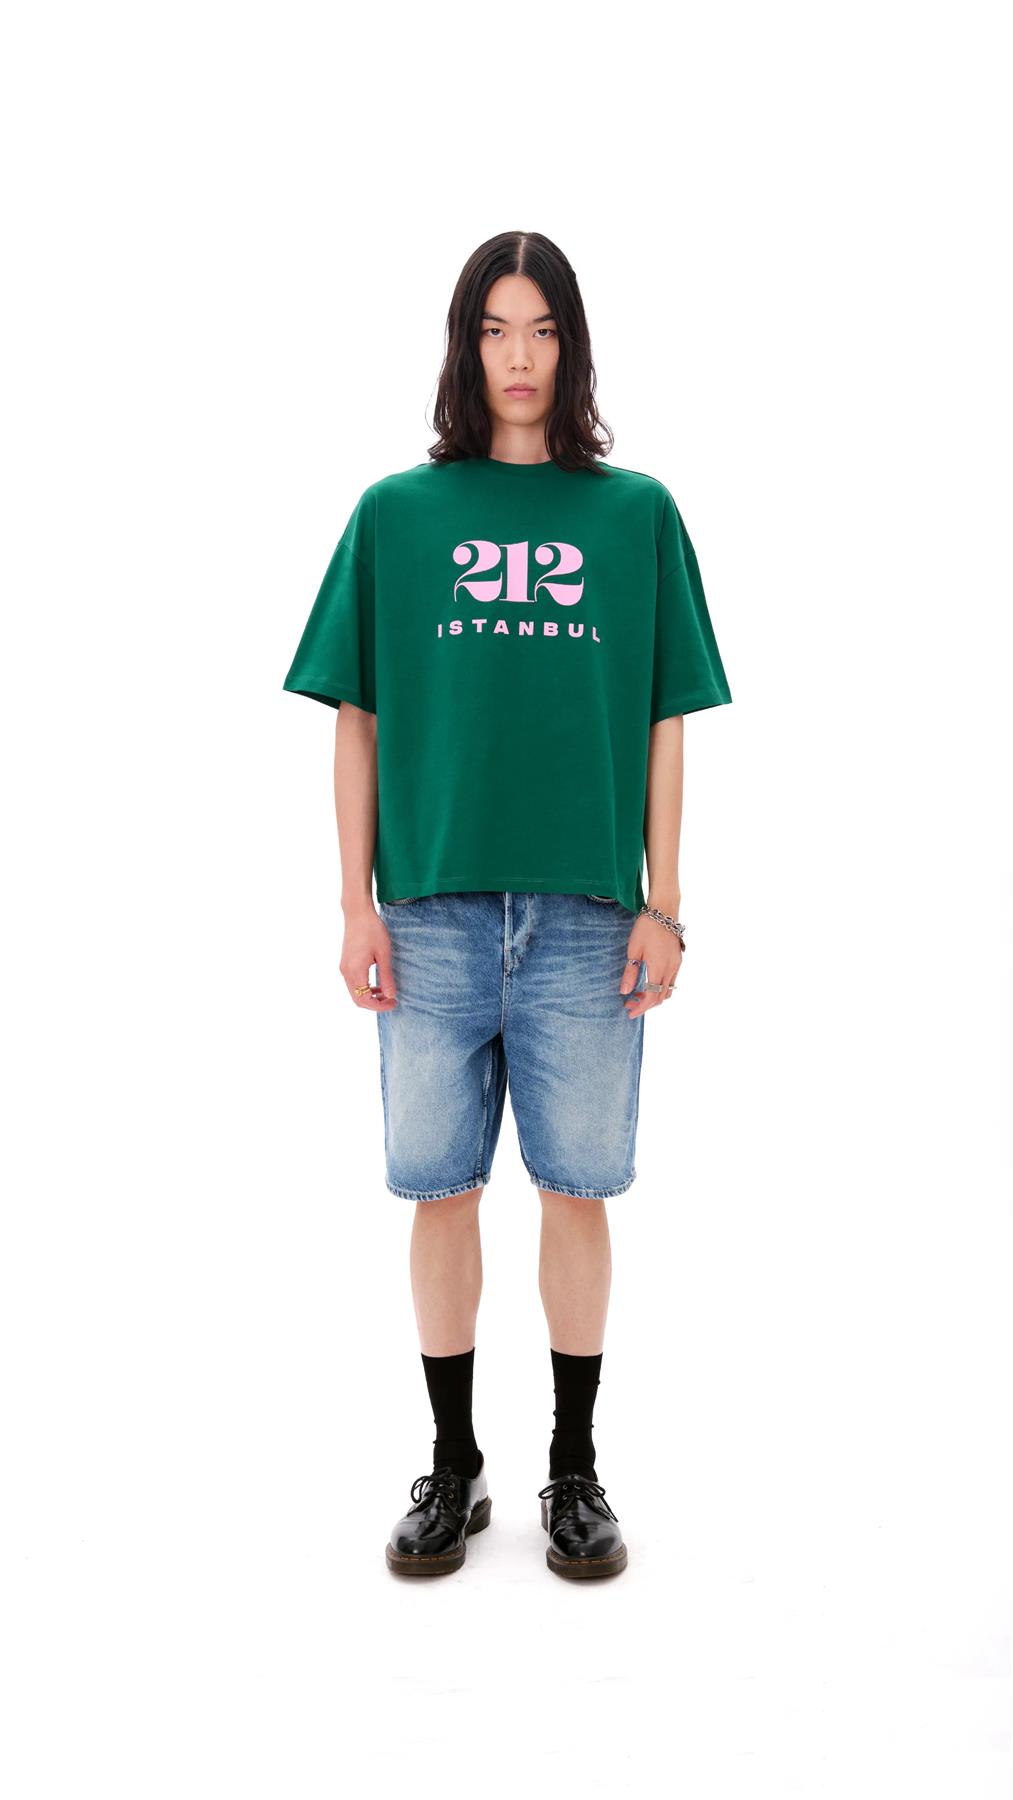 212 T-Shirt - Green/Pink (212 Istanbul Logo)